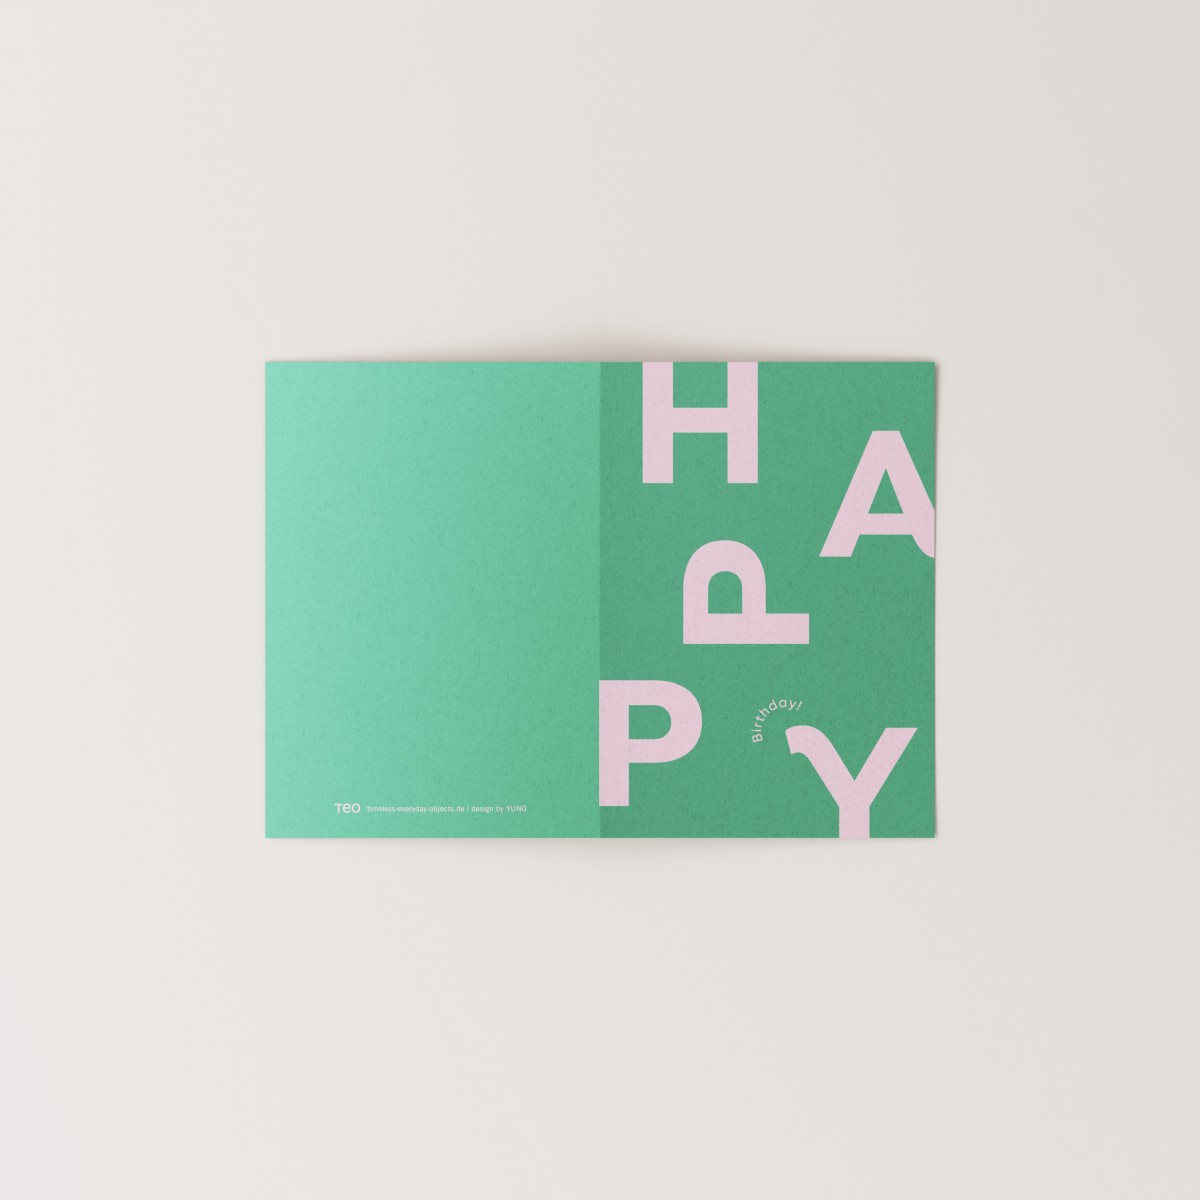 Grußkarten - HAPPY BIRTHDAY / DANKE / LOVE

